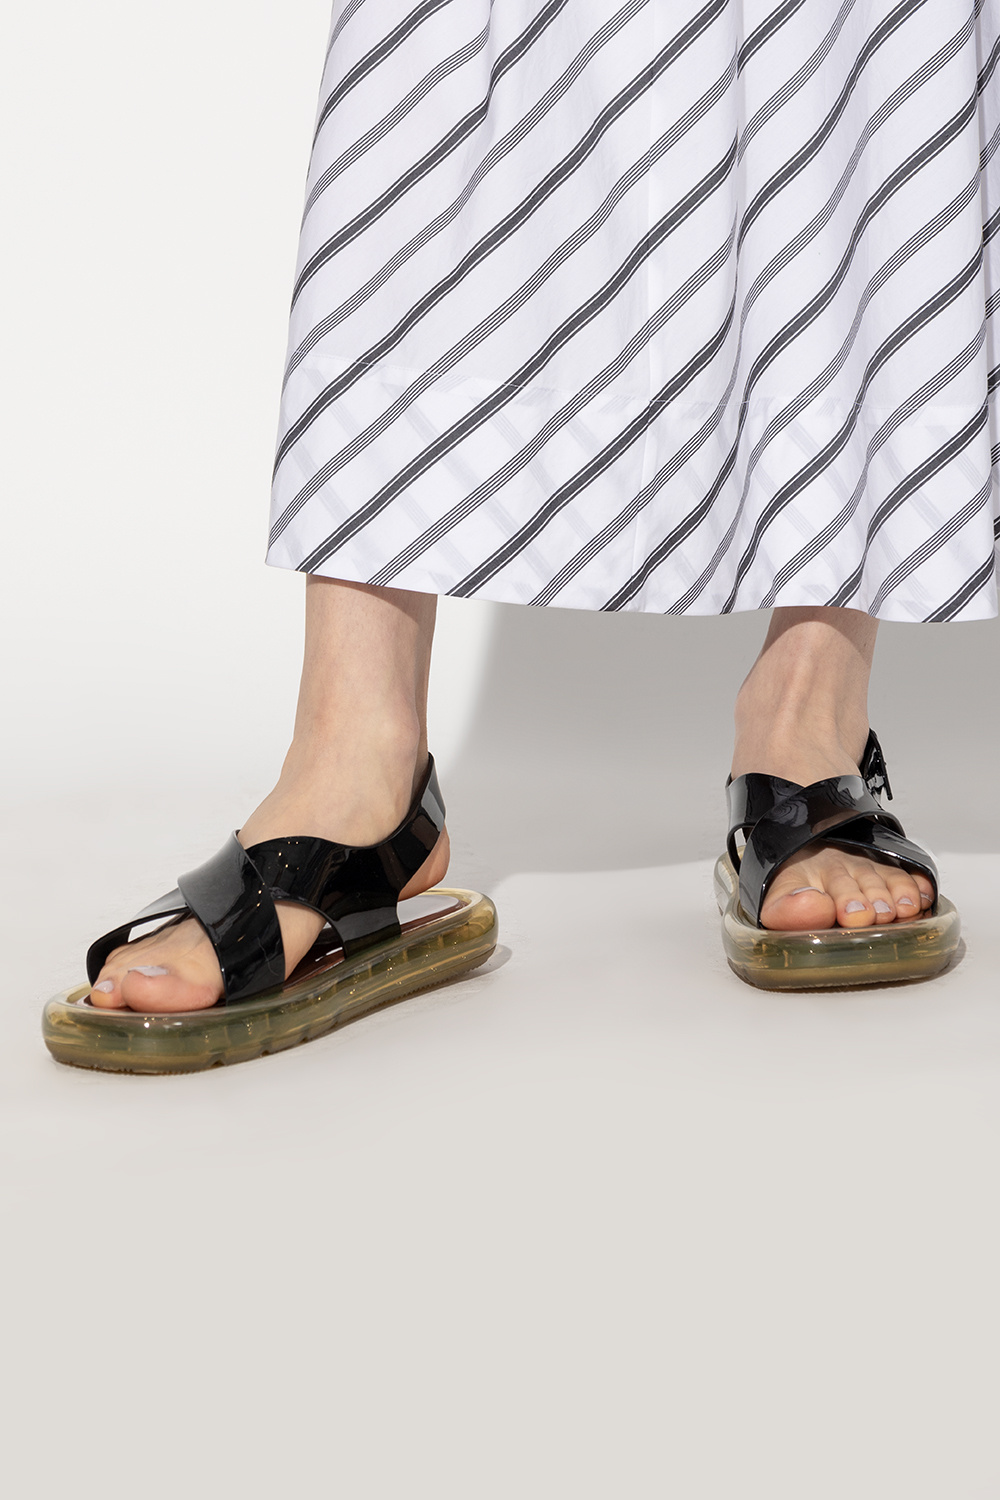 Tory Burch 'Bubble Jelly' rubber sandals | Women's Shoes | Vitkac